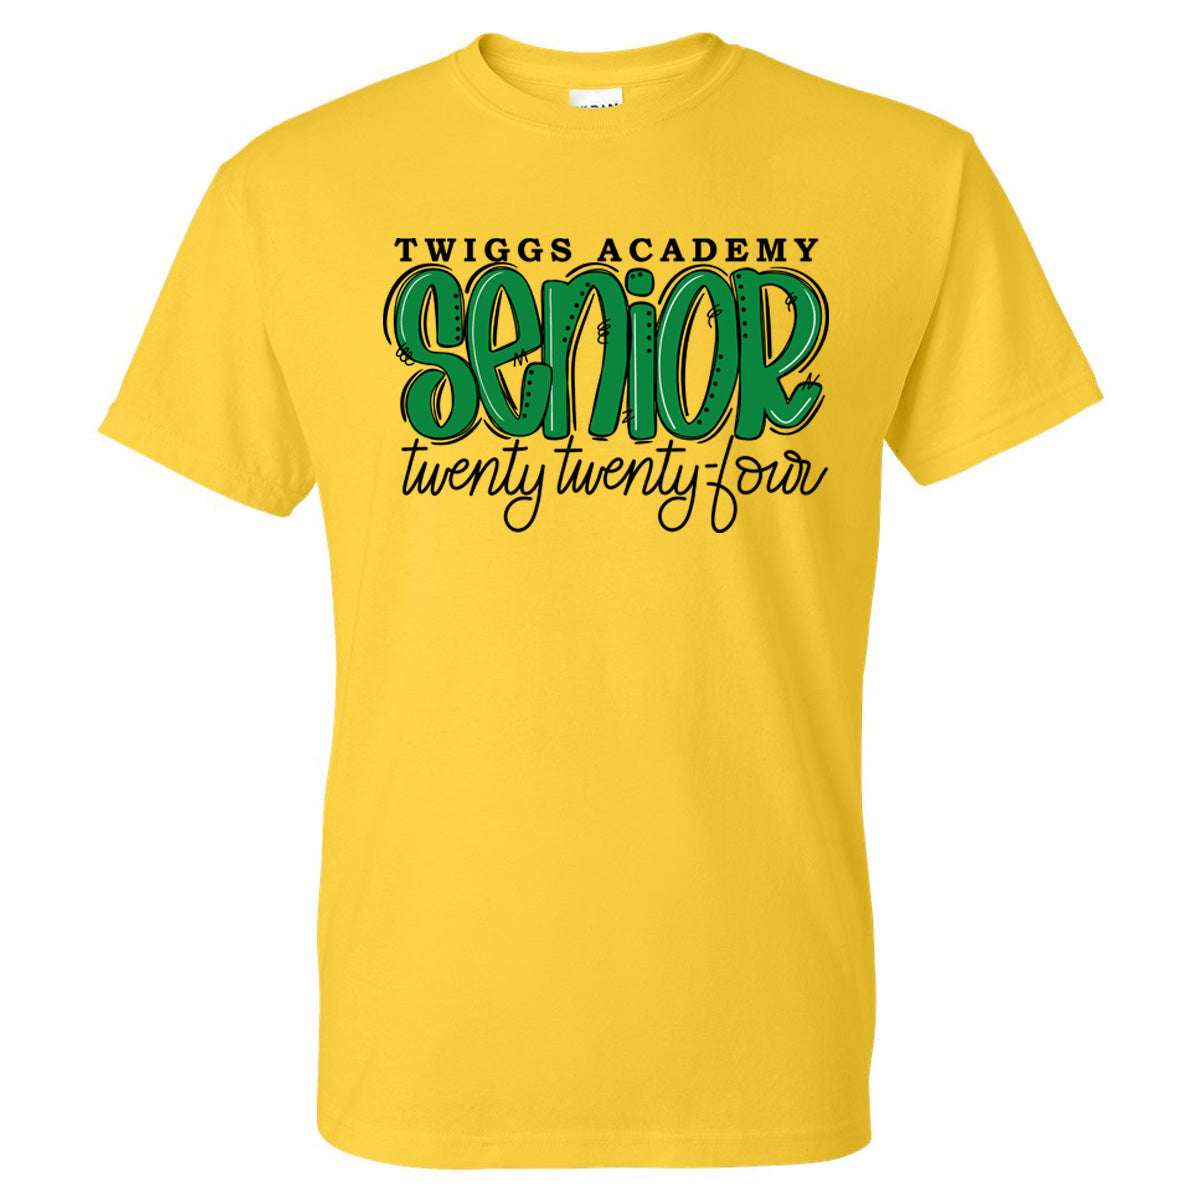 Twiggs Academy - Senior Twenty Twenty-Four - Yellow (Tee/Hoodie/Sweatshirt) - Southern Grace Creations